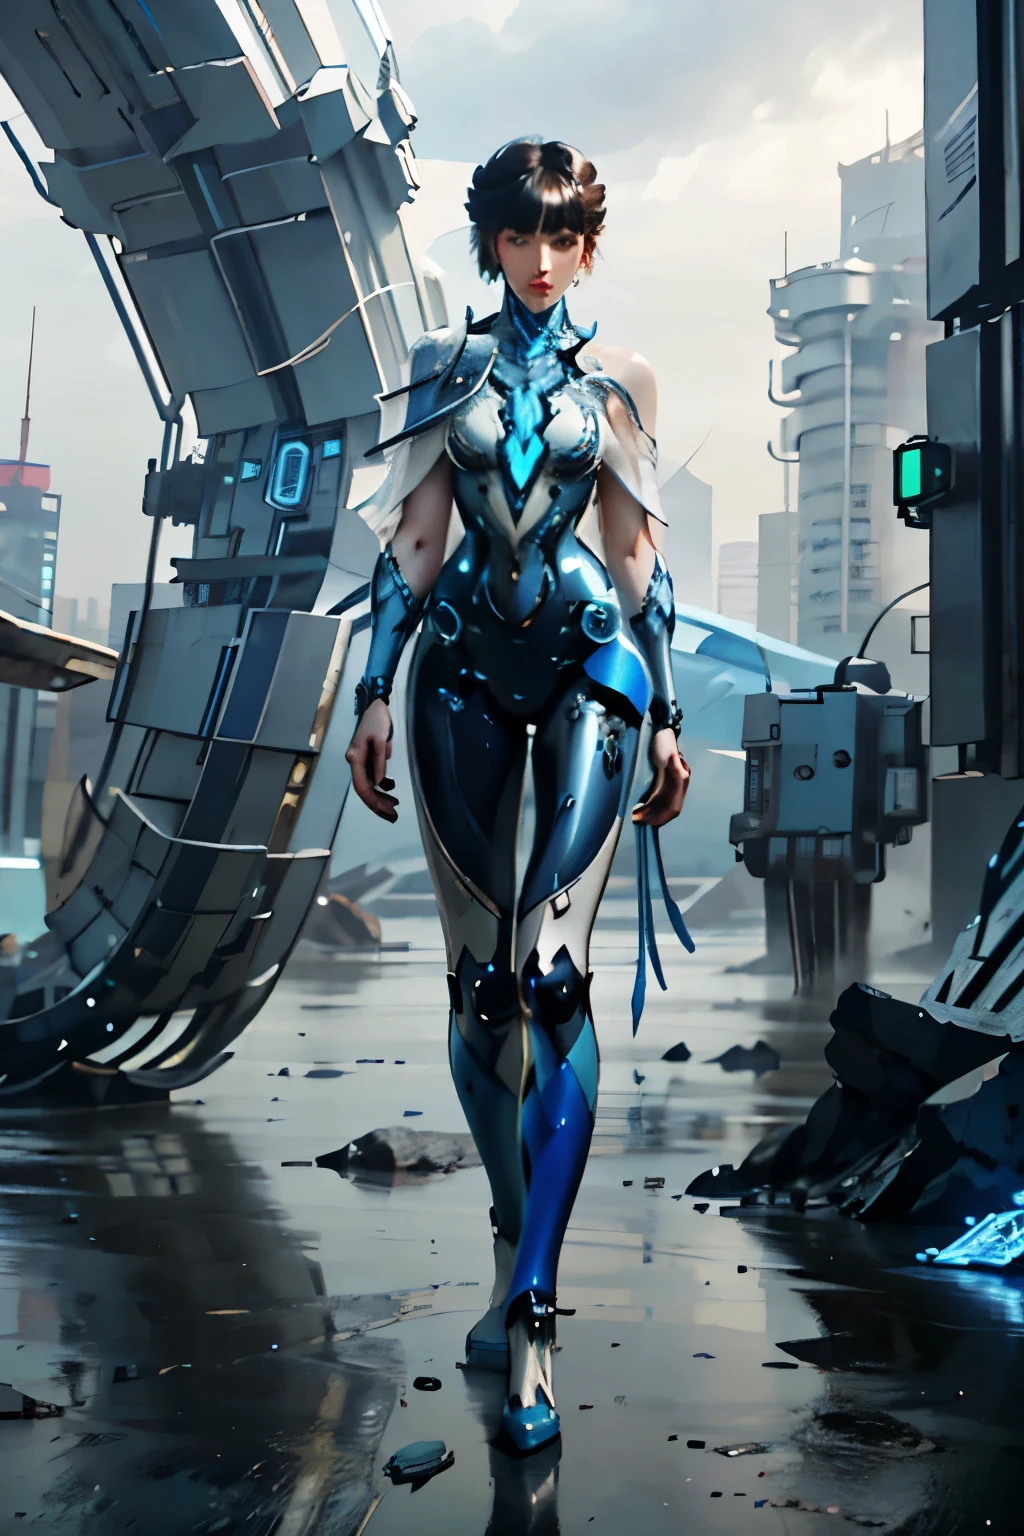 Full body image, full body, standing posture, a woman, blue and white, conceptual art, mechanical, cyberpunk, mecha